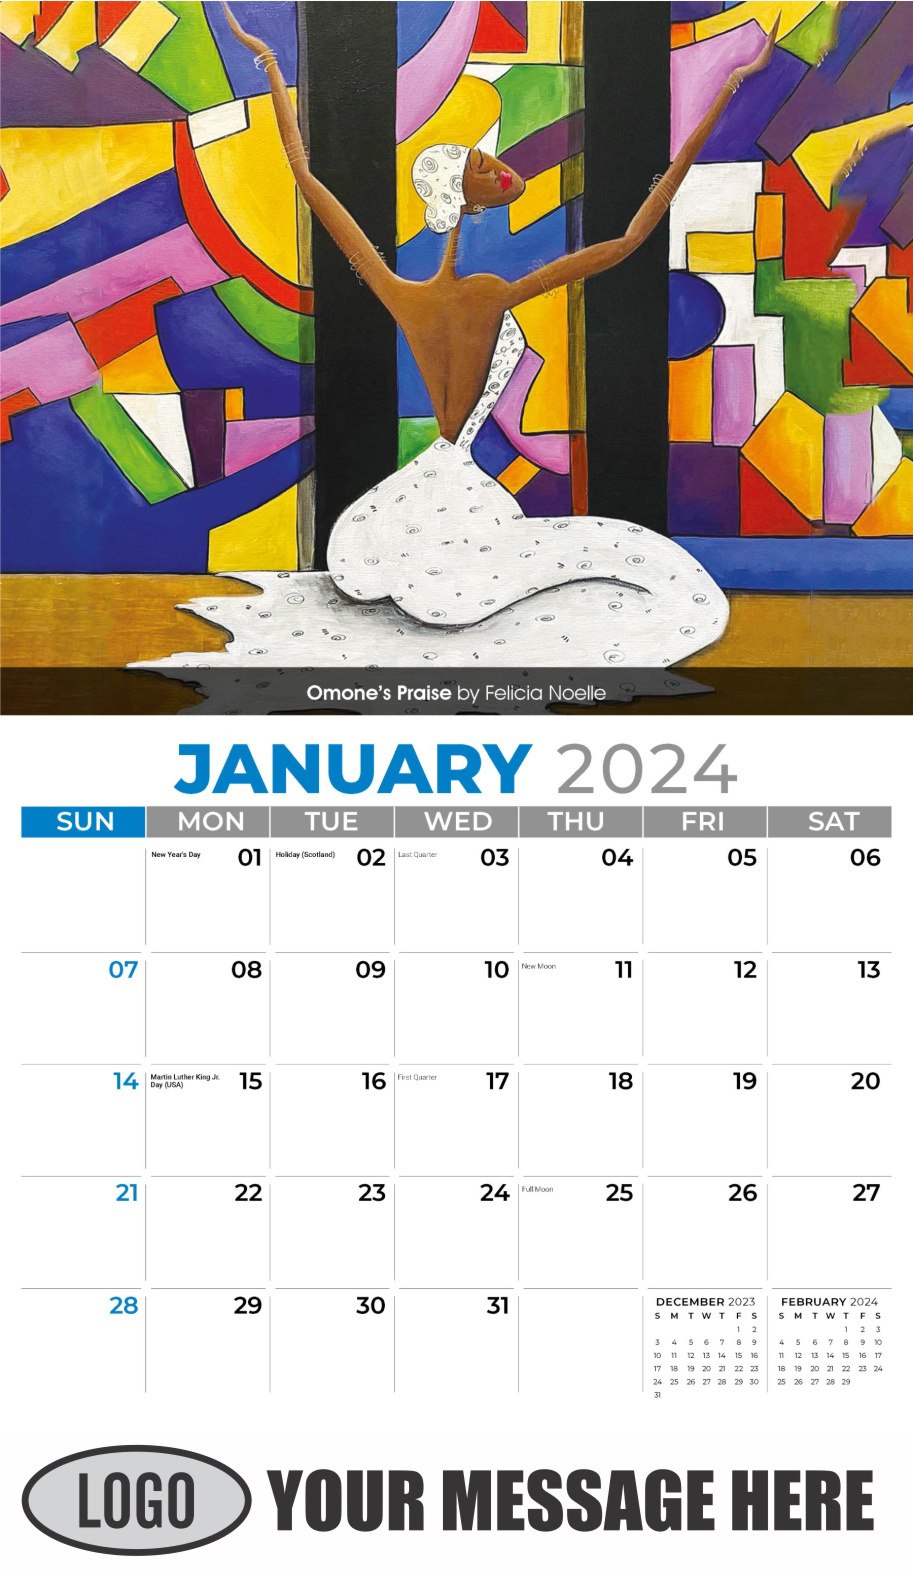 Celebration of African American Art 2024 Business Promotional Calendar - January